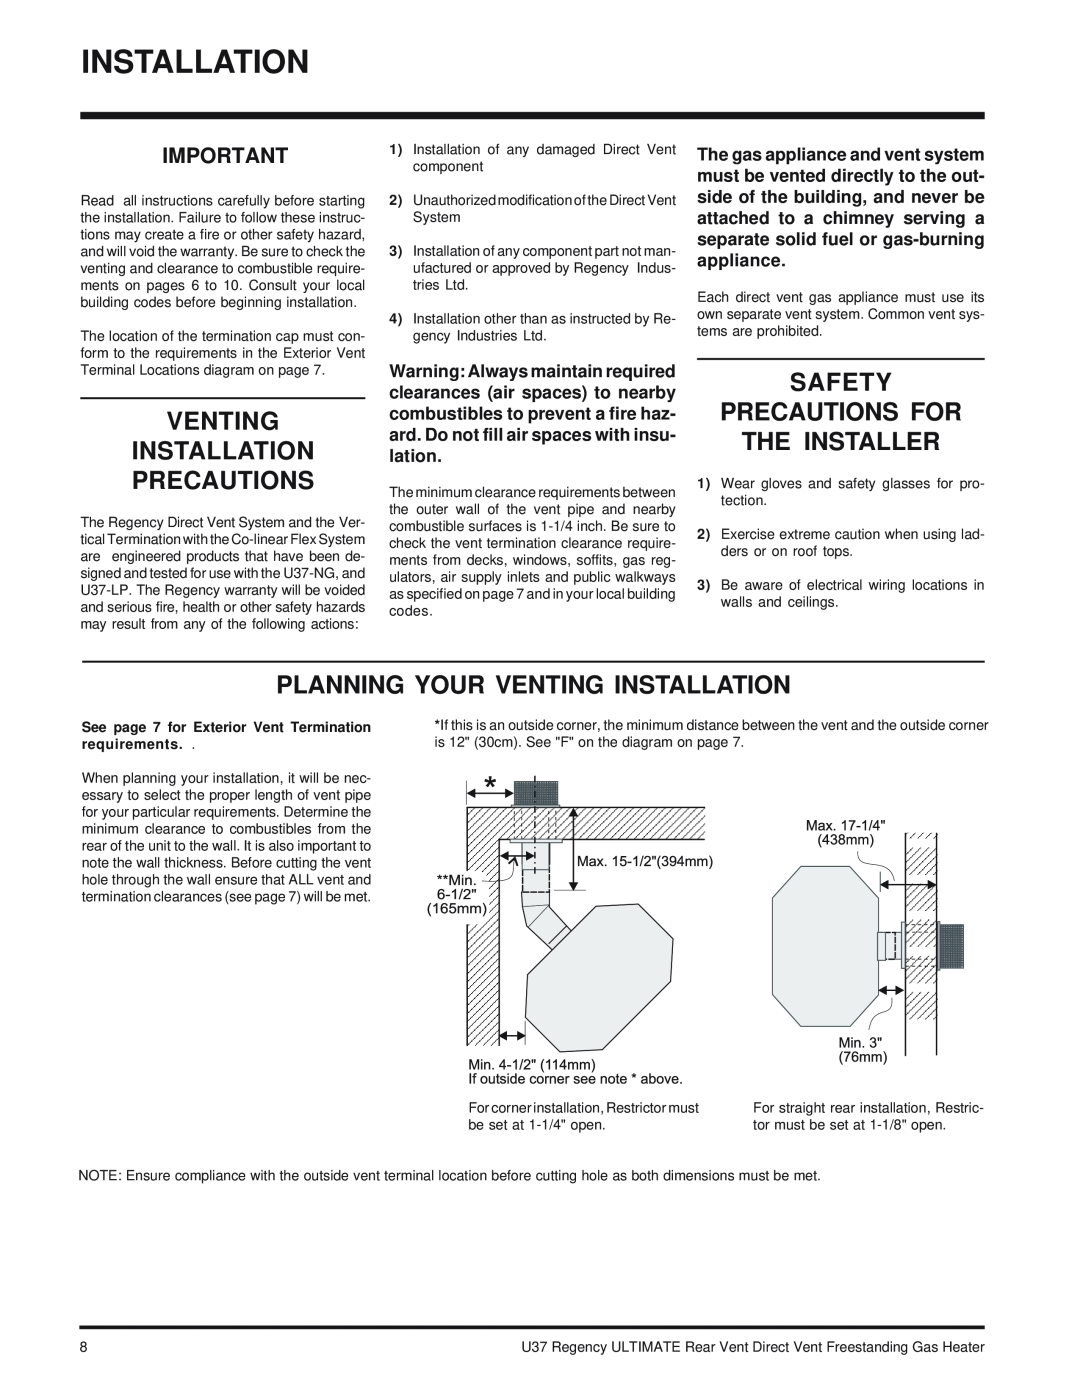 Regency U37-LP PROPANE, U37-NG NATURAL GAS Venting Installation Precautions, Safety Precautions For The Installer 